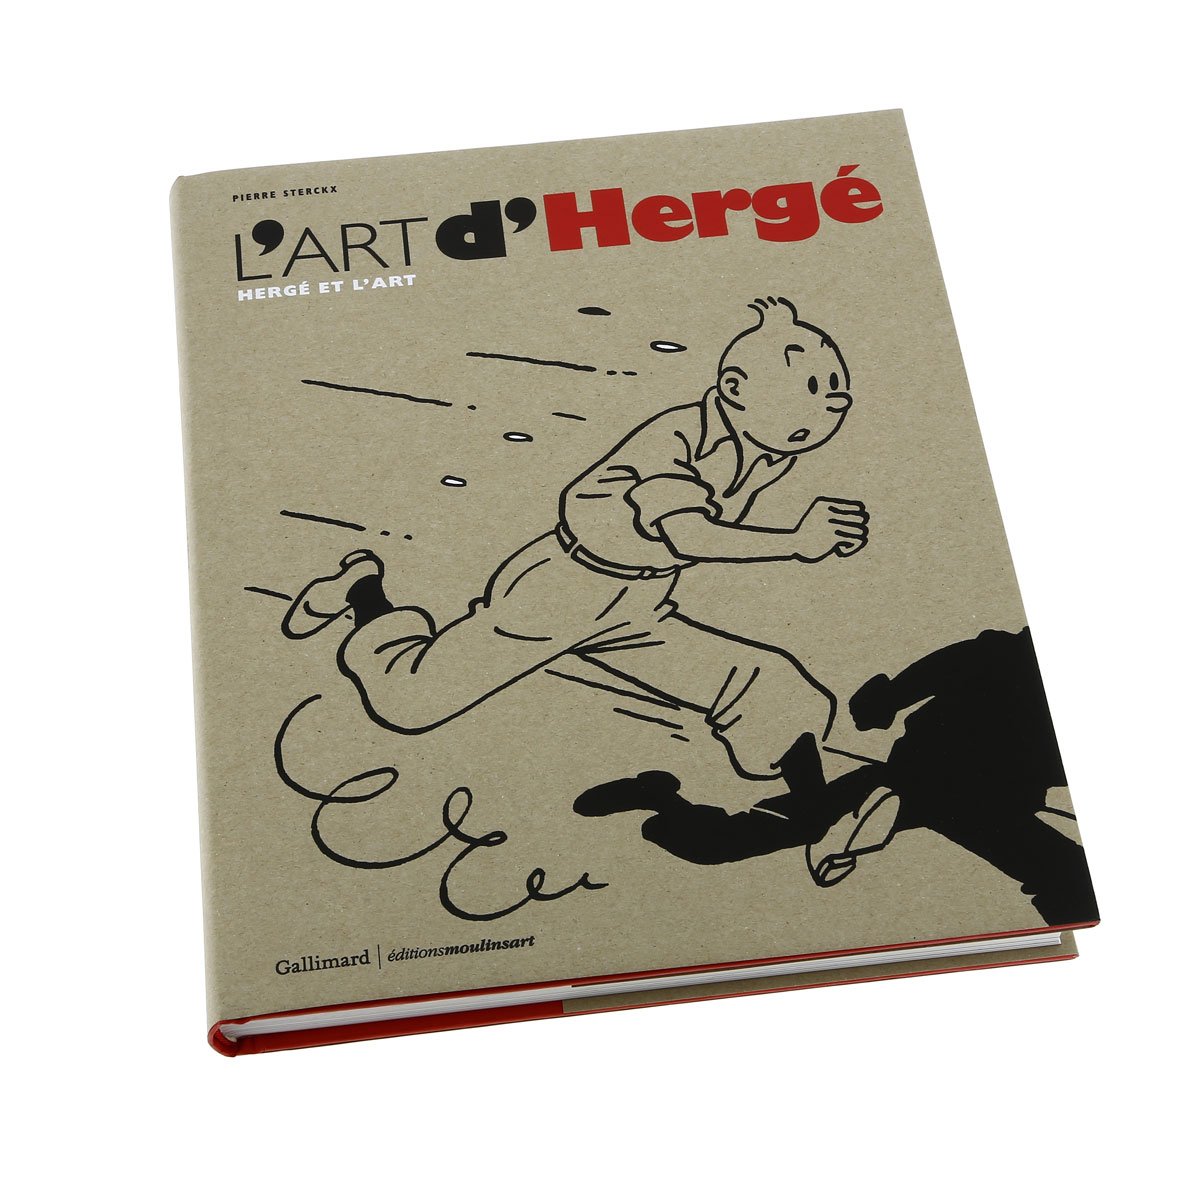 L'art d'Hergé